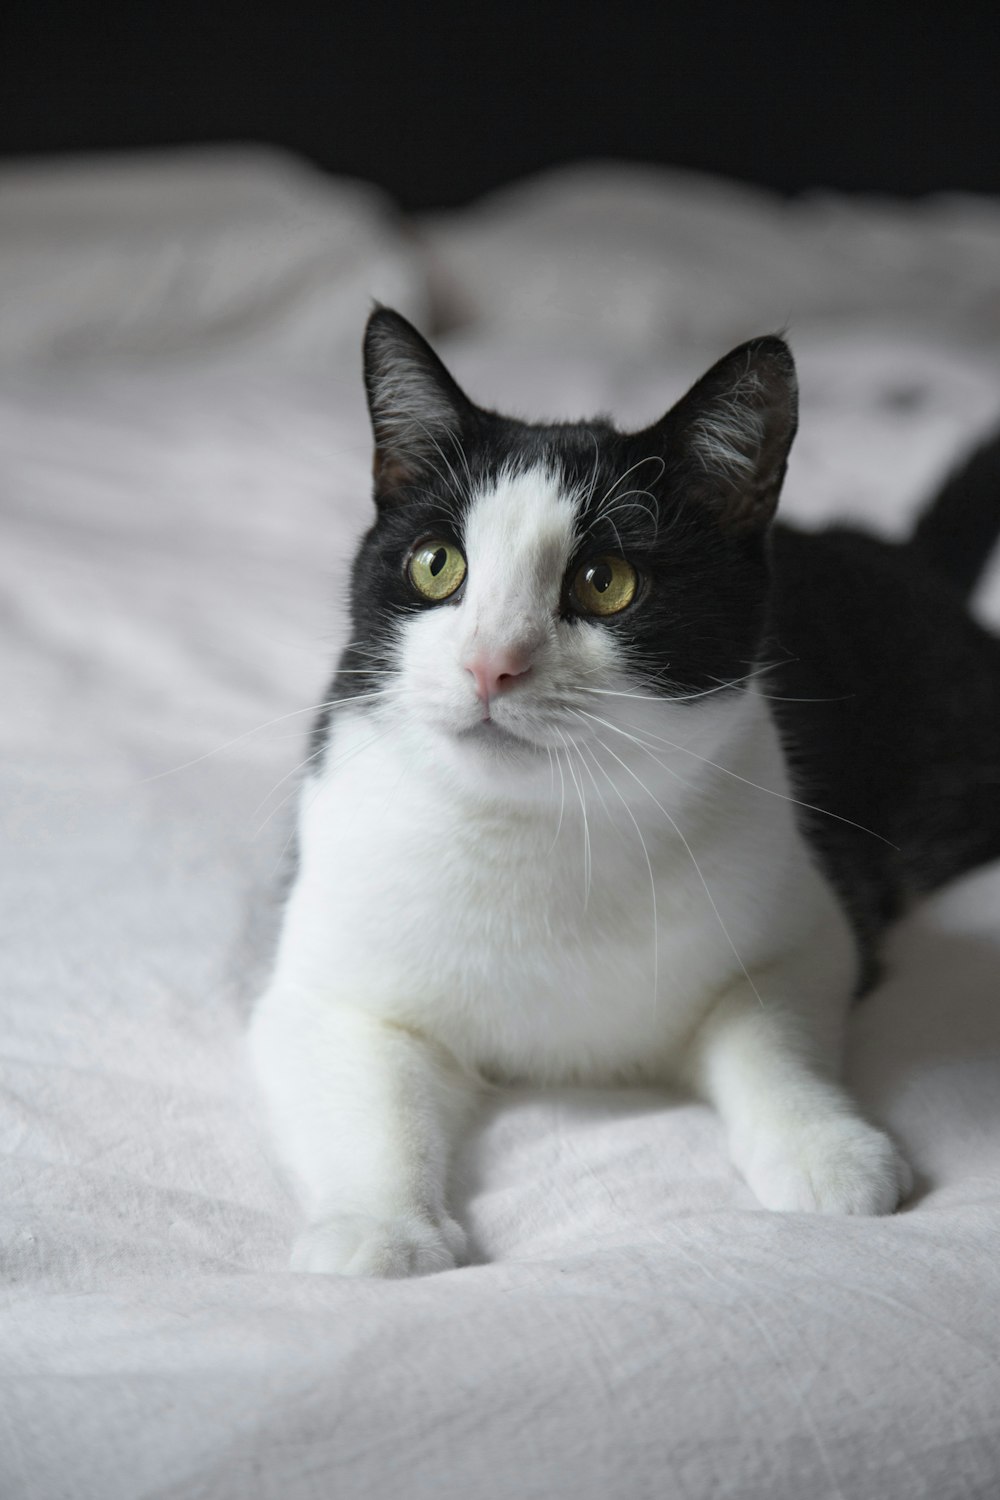 short-fur black and white cat on white mattress photo – Free ...